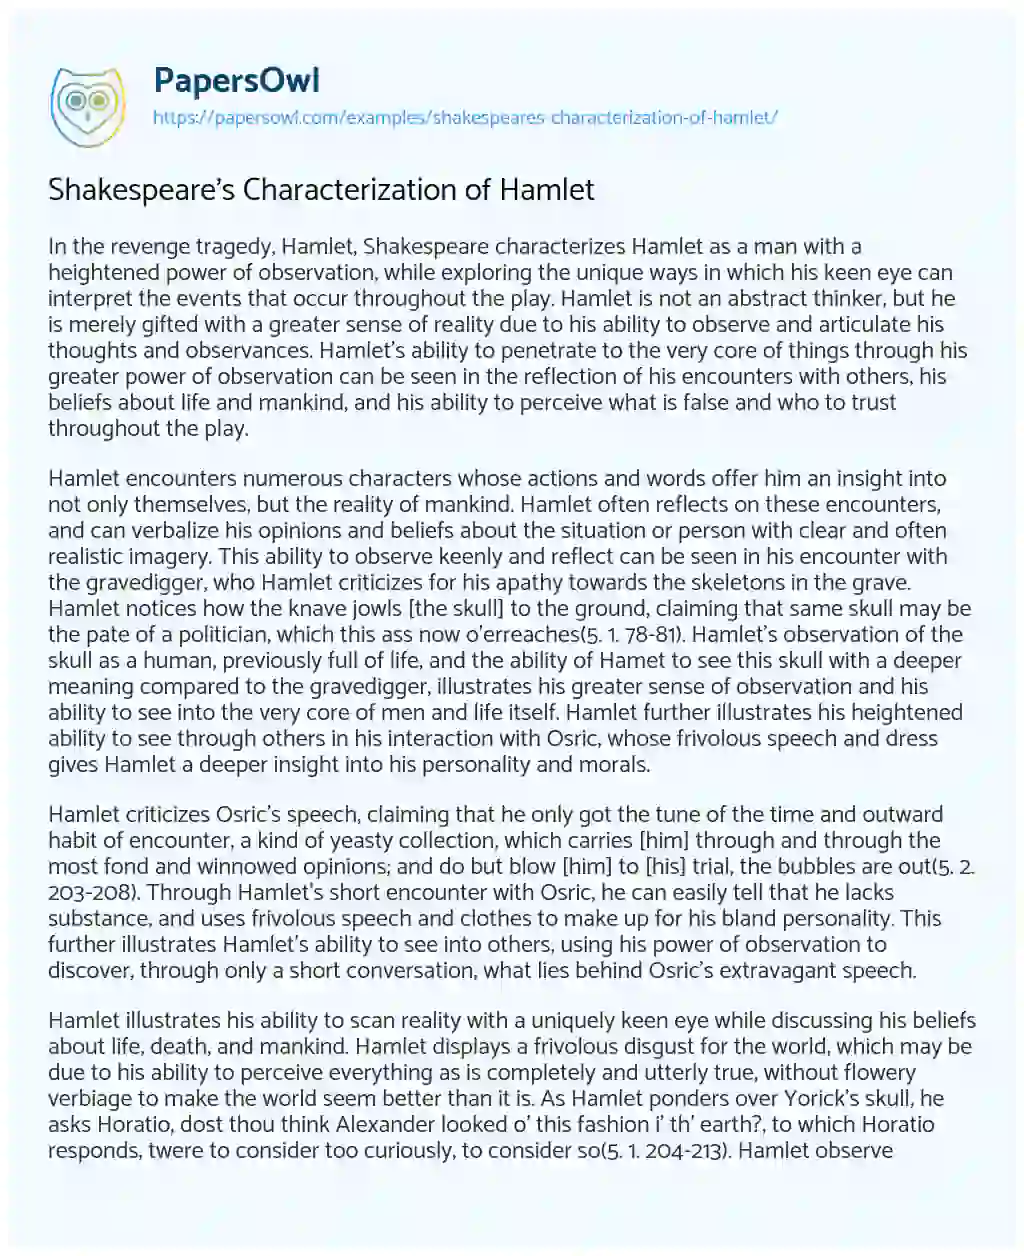 Essay on Shakespeare’s Characterization of Hamlet